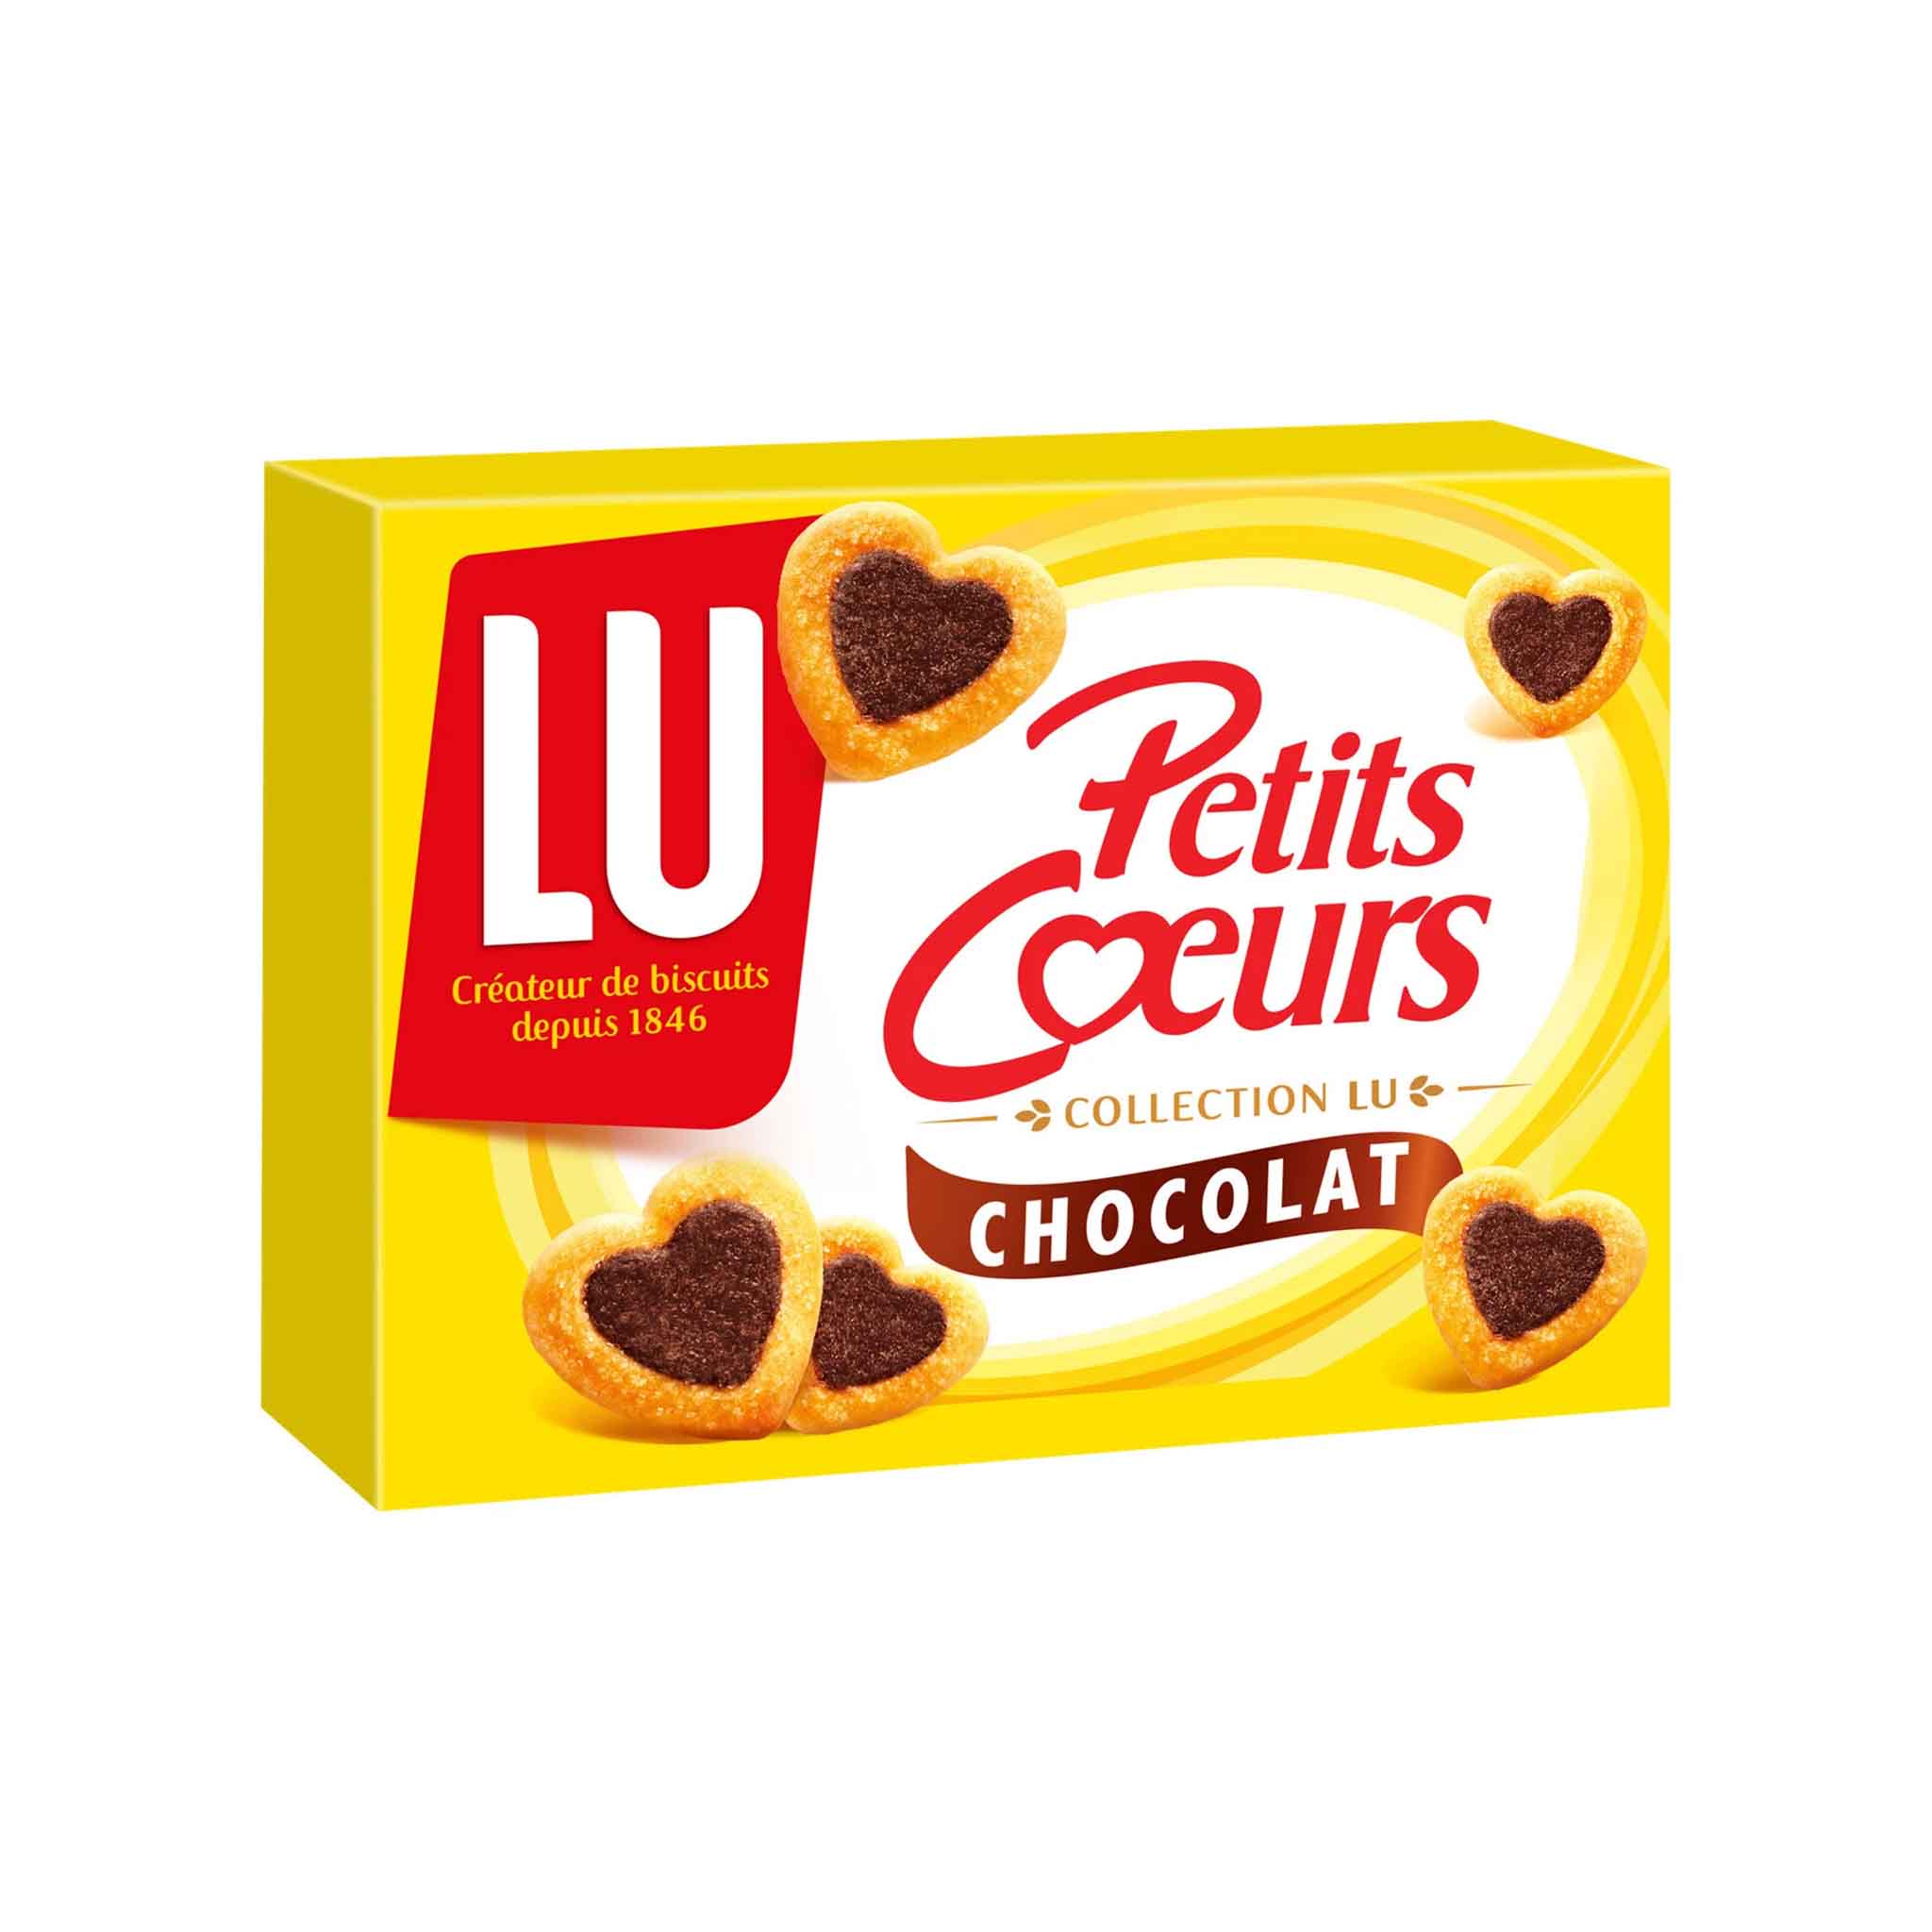 LU PETITS COEURS CHOCOLATE COOKIES 125g